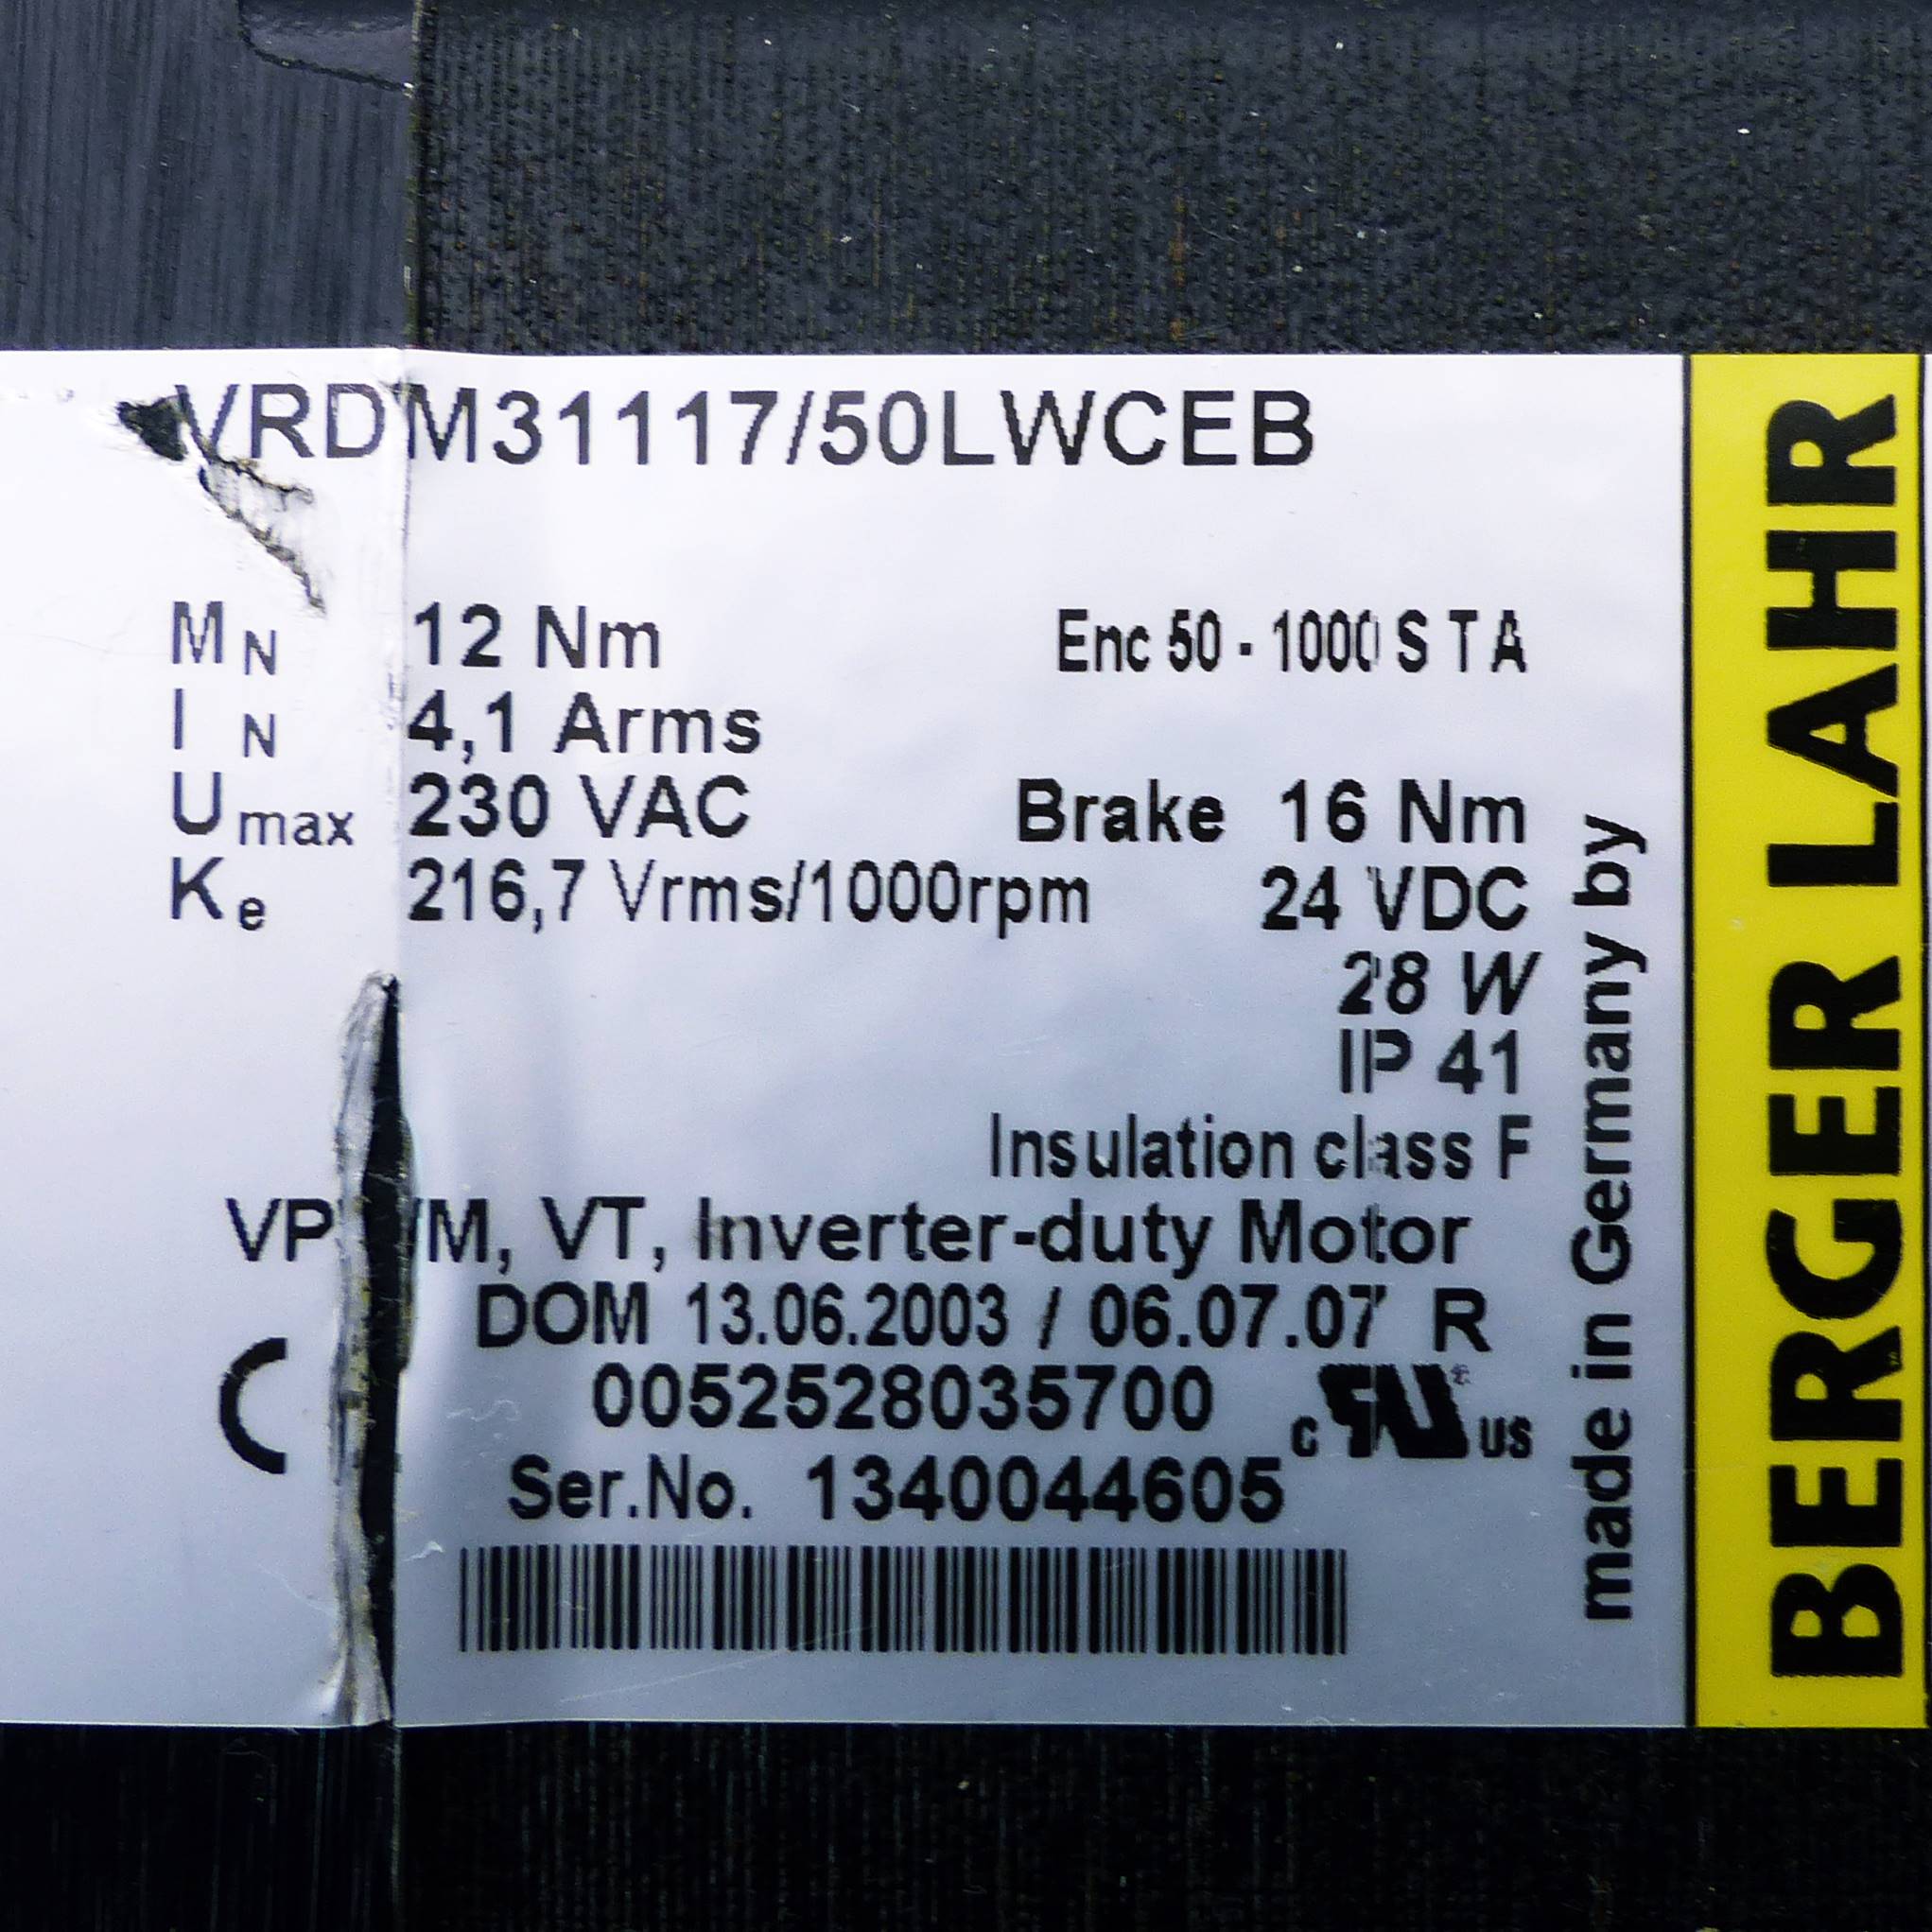 Inverter-duty Motor 